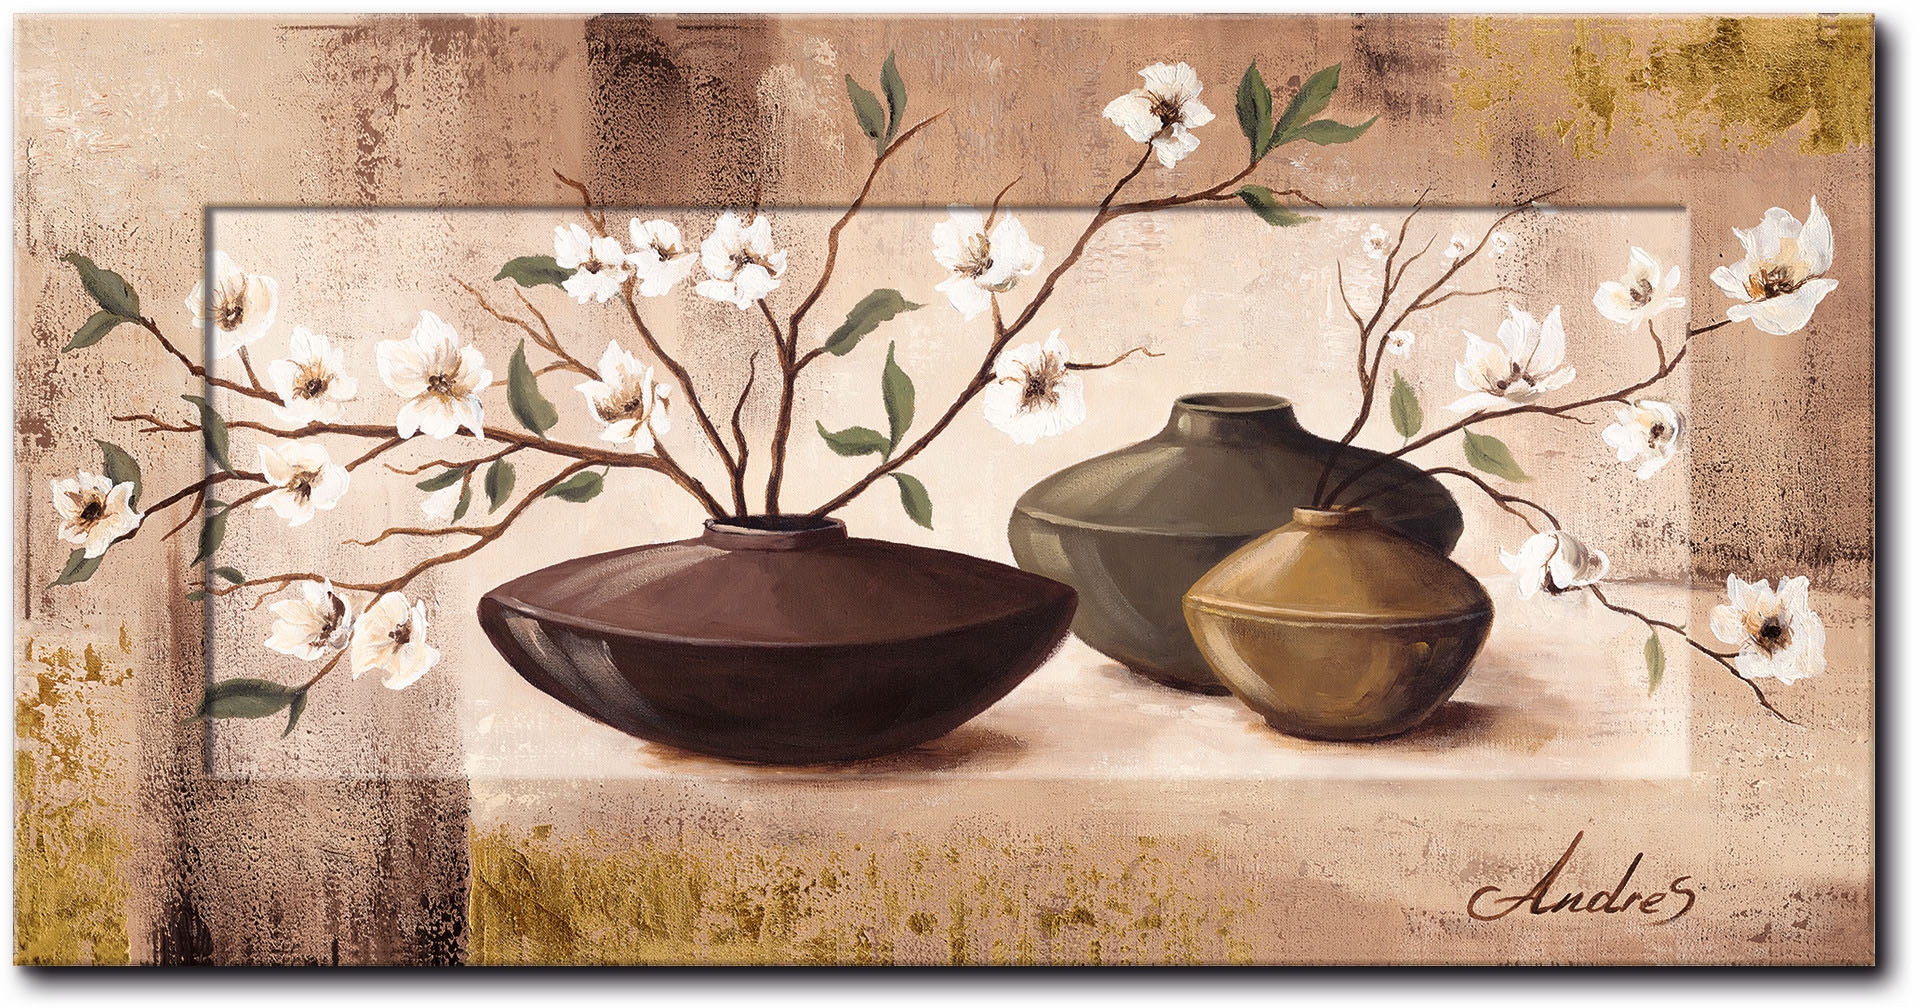 & (1 Töpfe, auf »Golden Artland Wandbild Raten Vasen eingerahmte St.) Kirschblüten«, bestellen